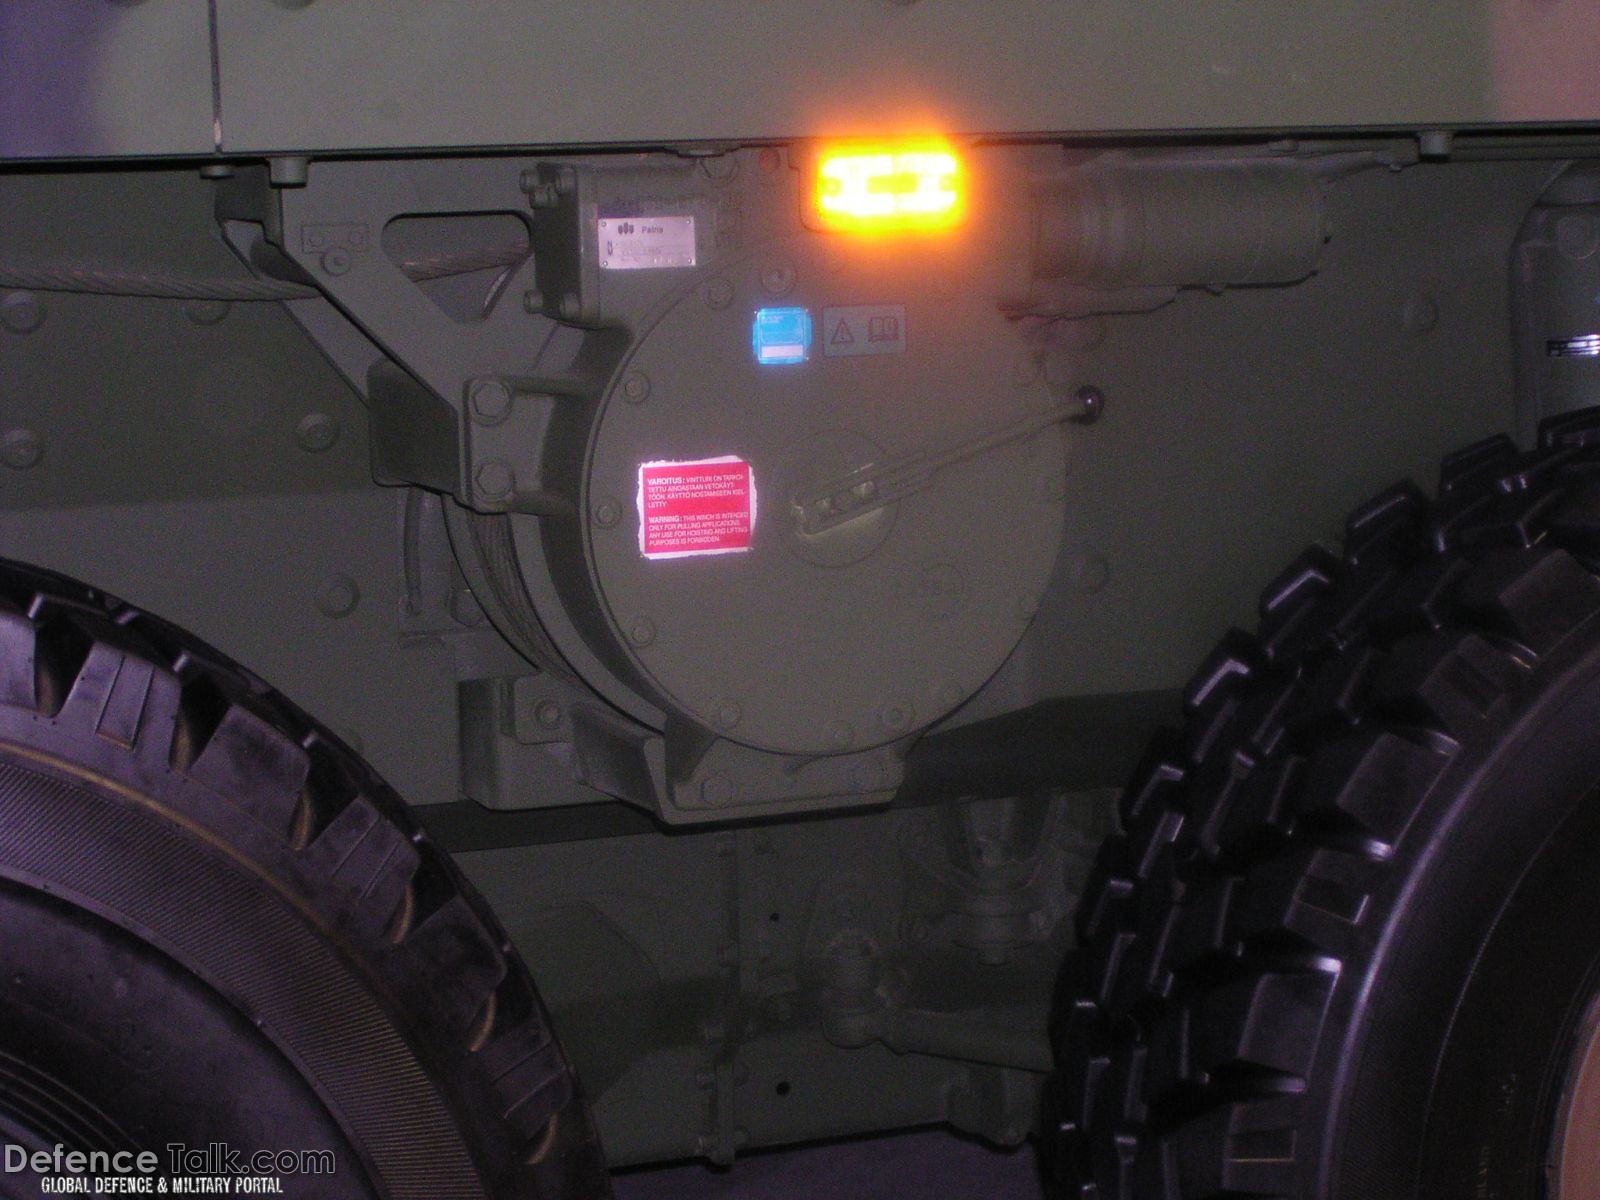 Patria AMV (Armoured Modular Vehicle) - Poland